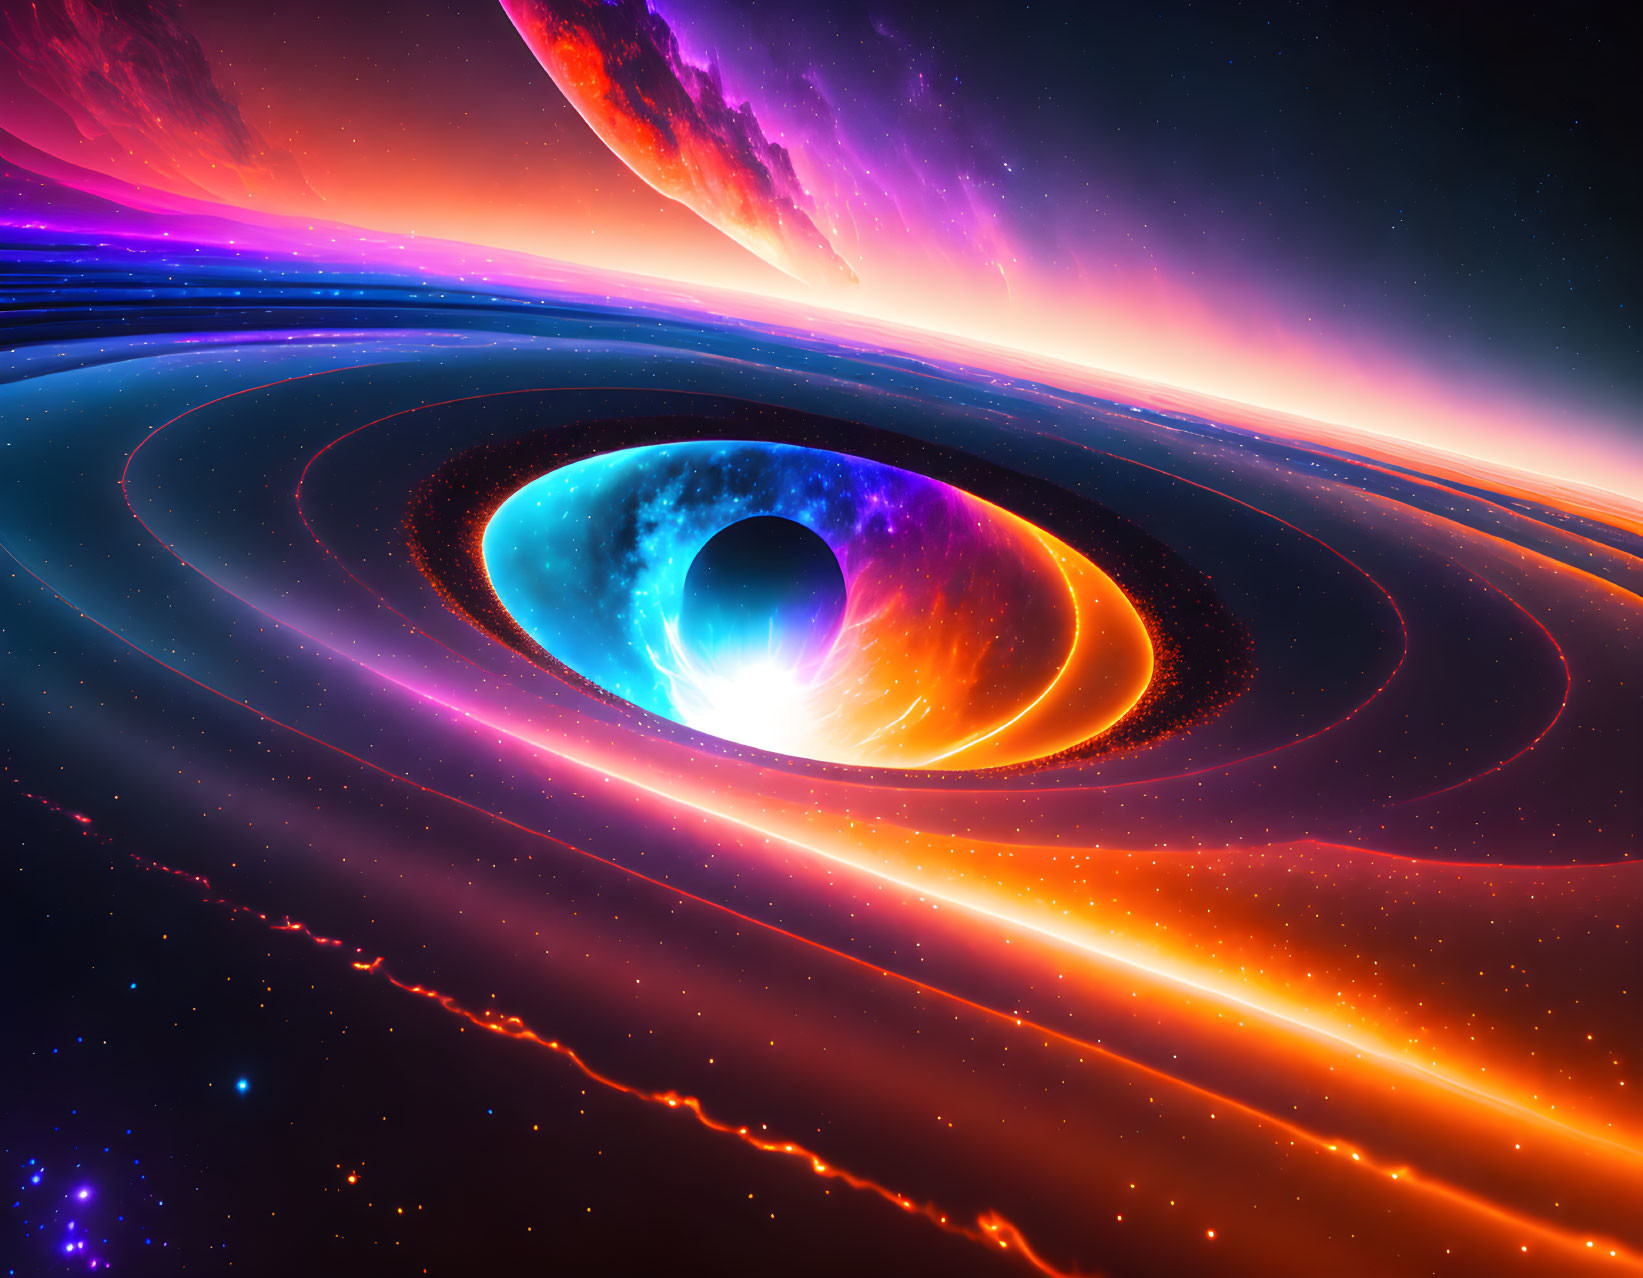 Colorful Digital Artwork: Black Hole with Accretion Disks & Nebula Background